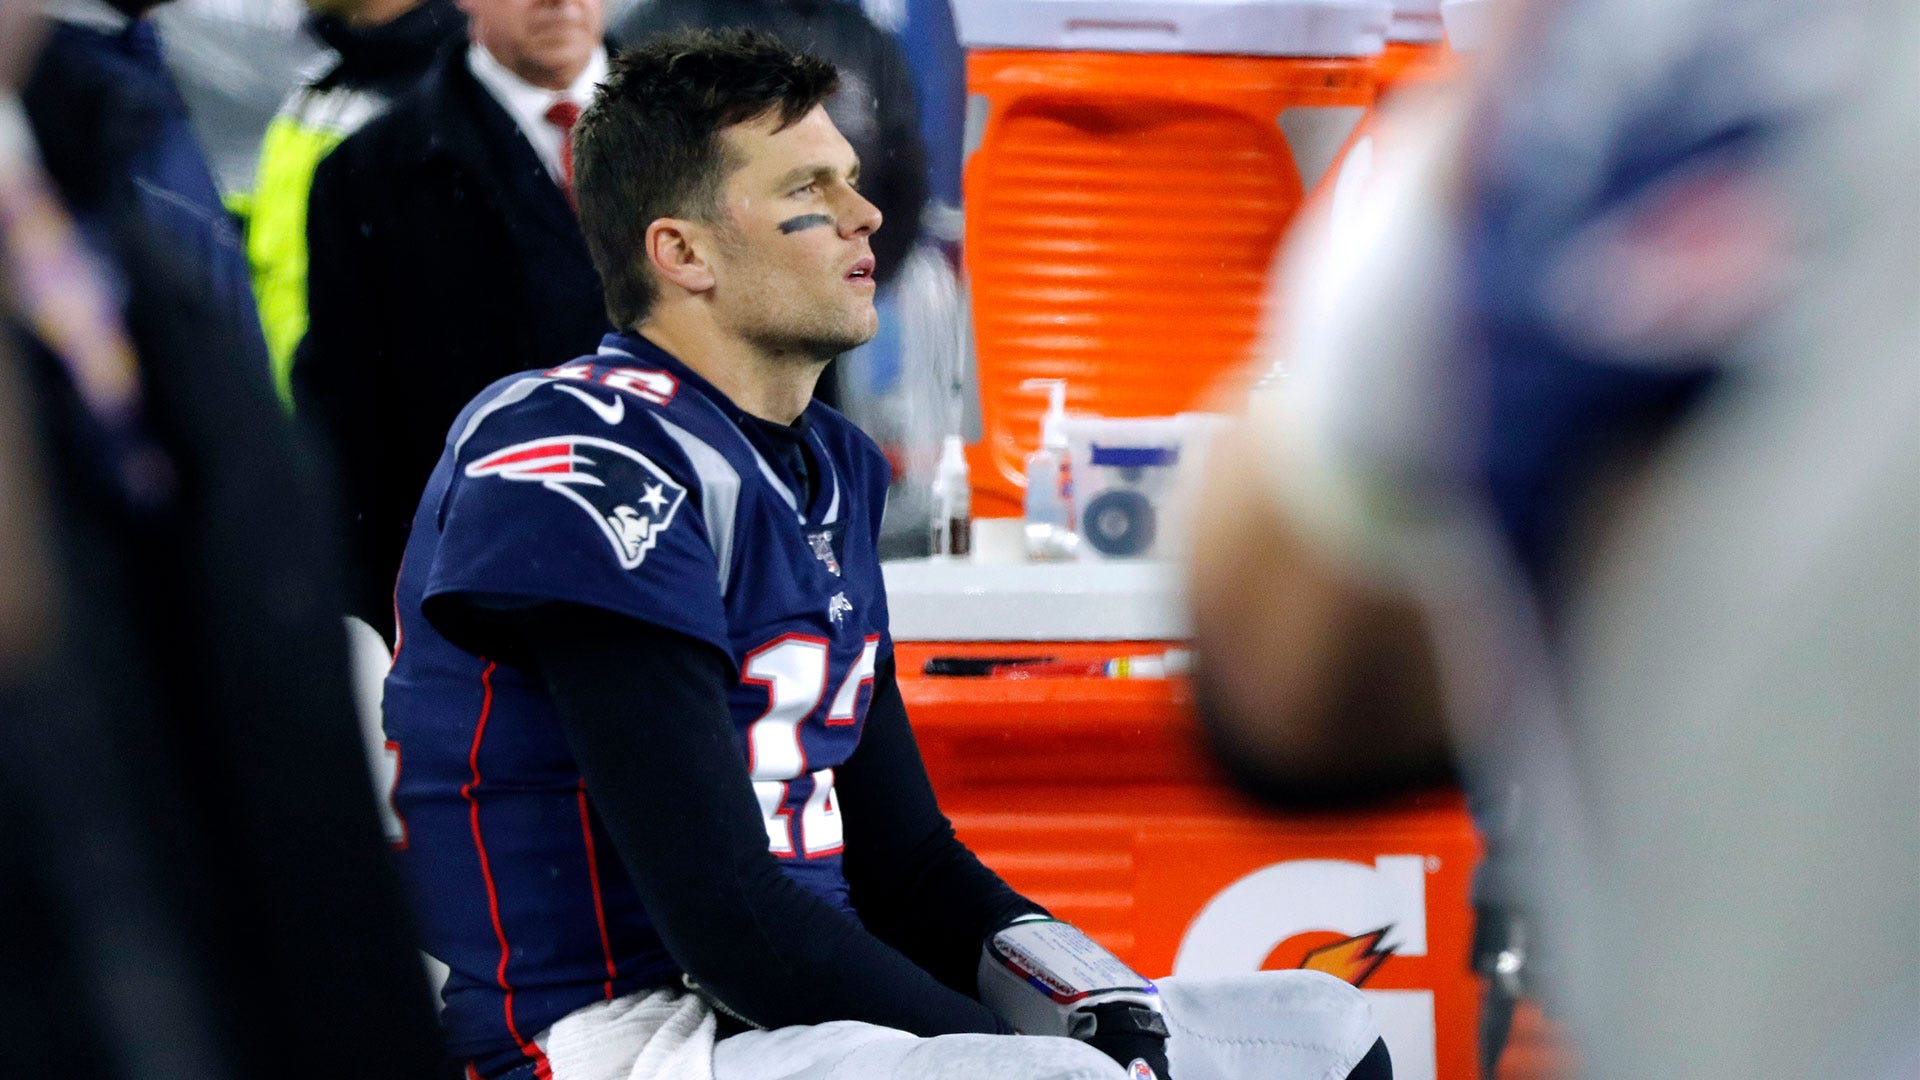 Patriots fall to Titans, leaving uncertain future for Tom Brady